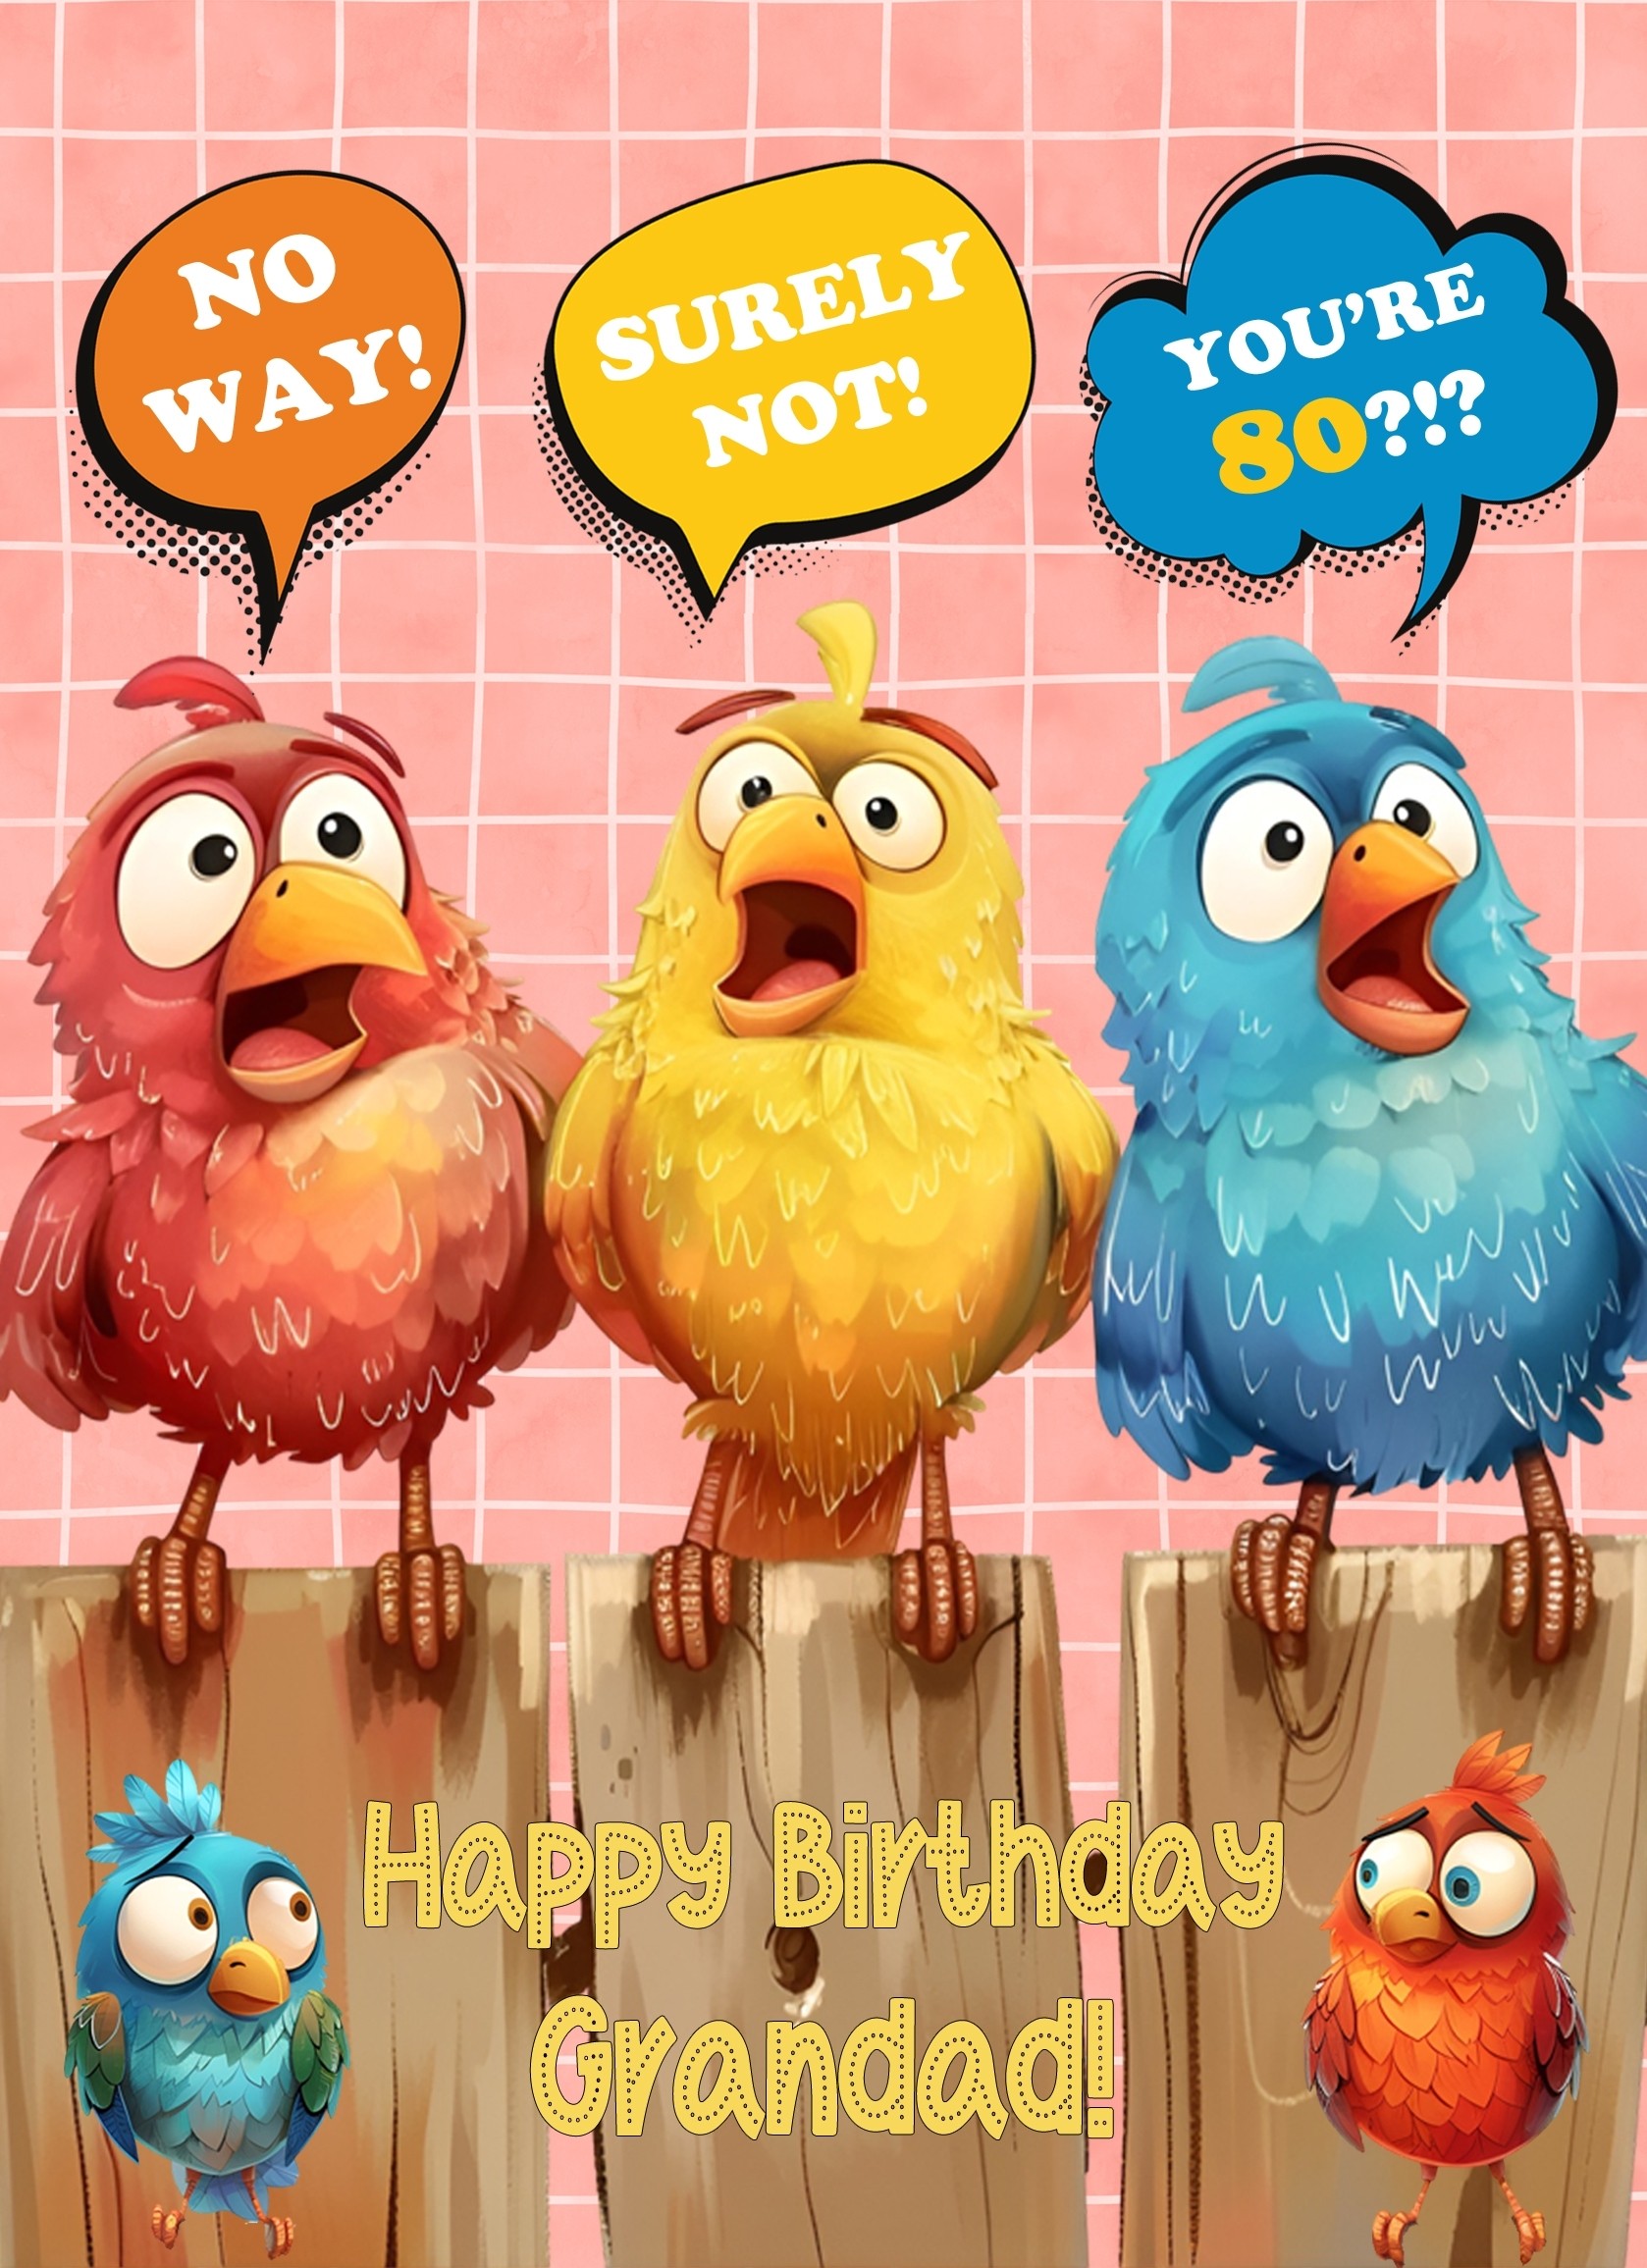 Grandad 80th Birthday Card (Funny Birds Surprised)